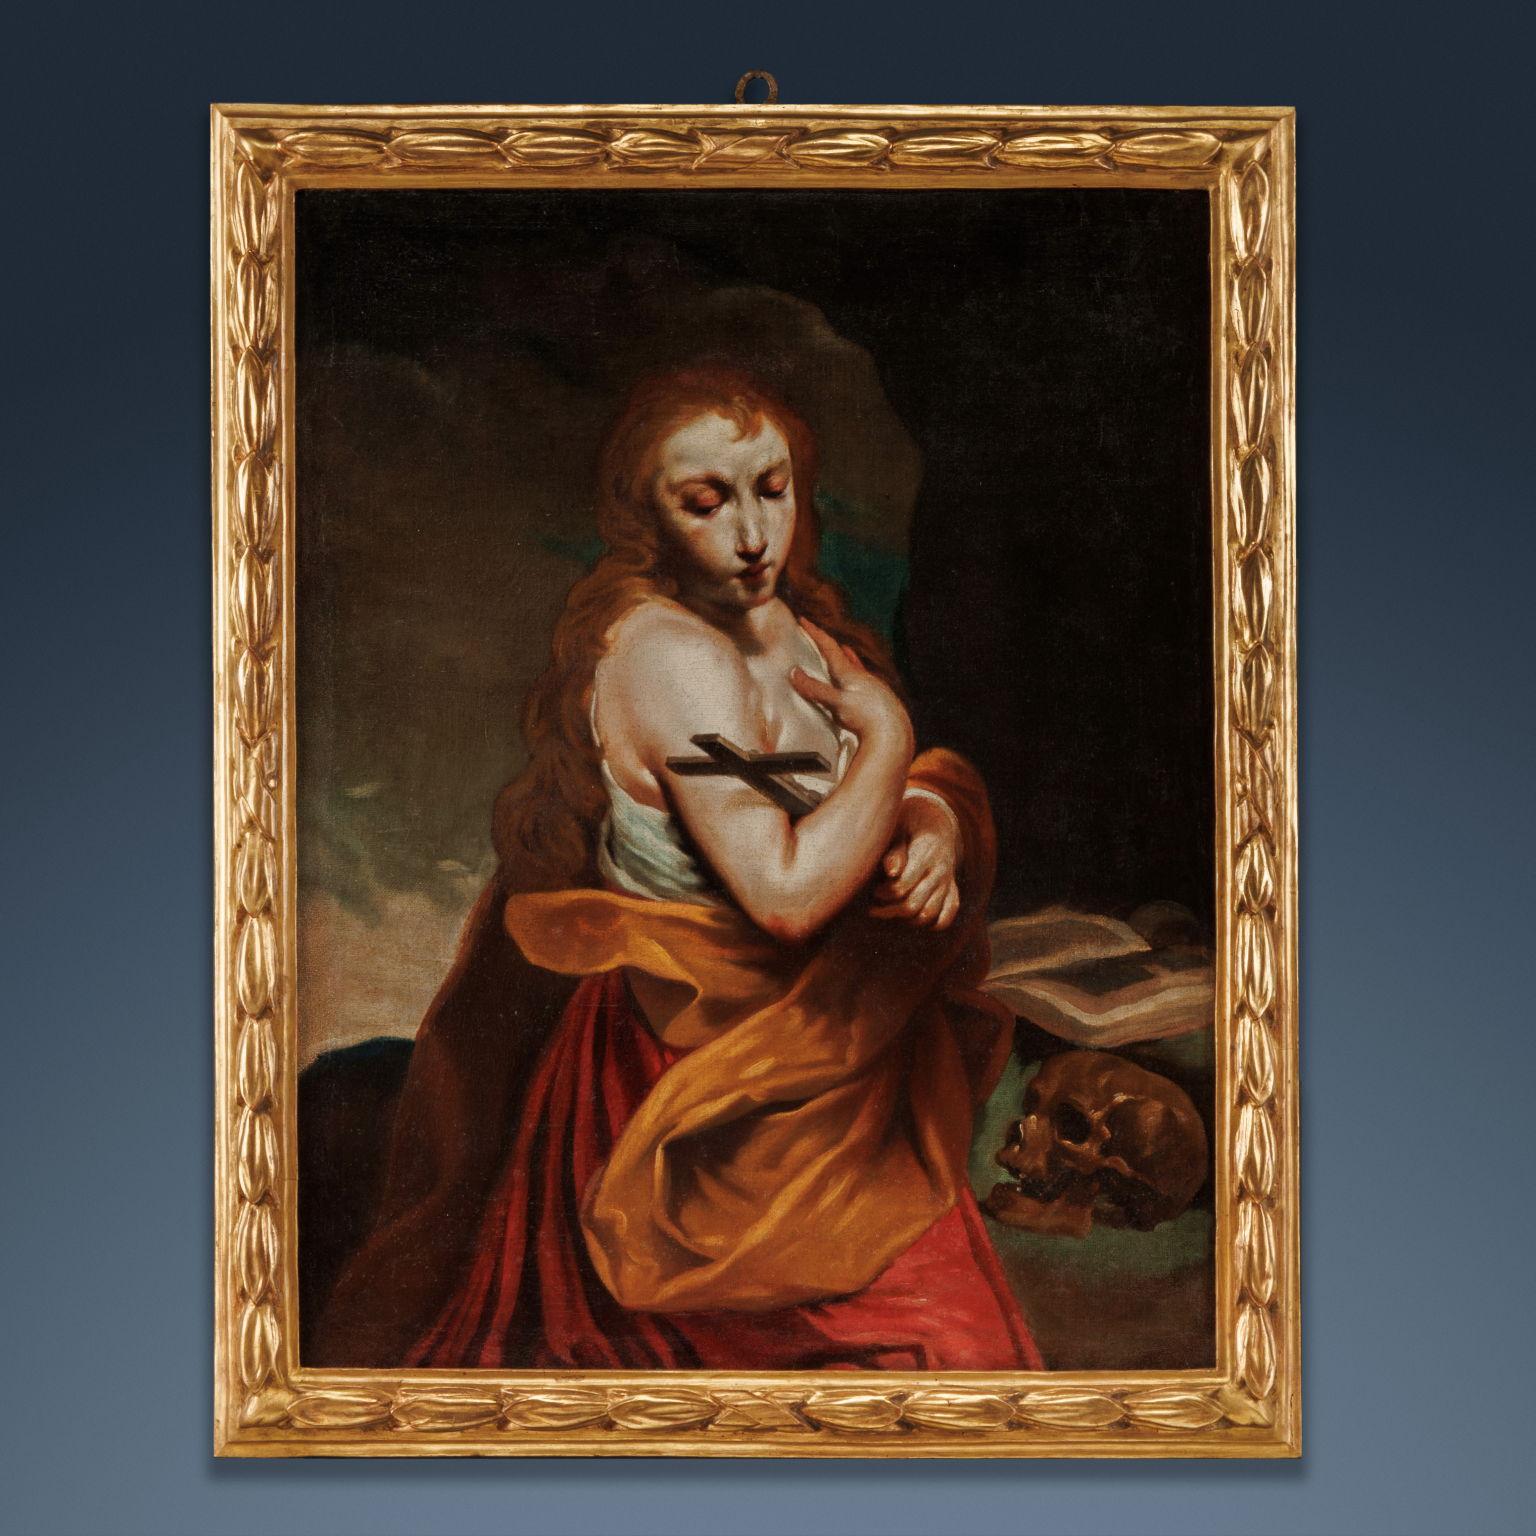 Giuseppe Maria Crespi, called Lo Spagnuolo Figurative Painting - Penitent Magdalene, c. 1750.